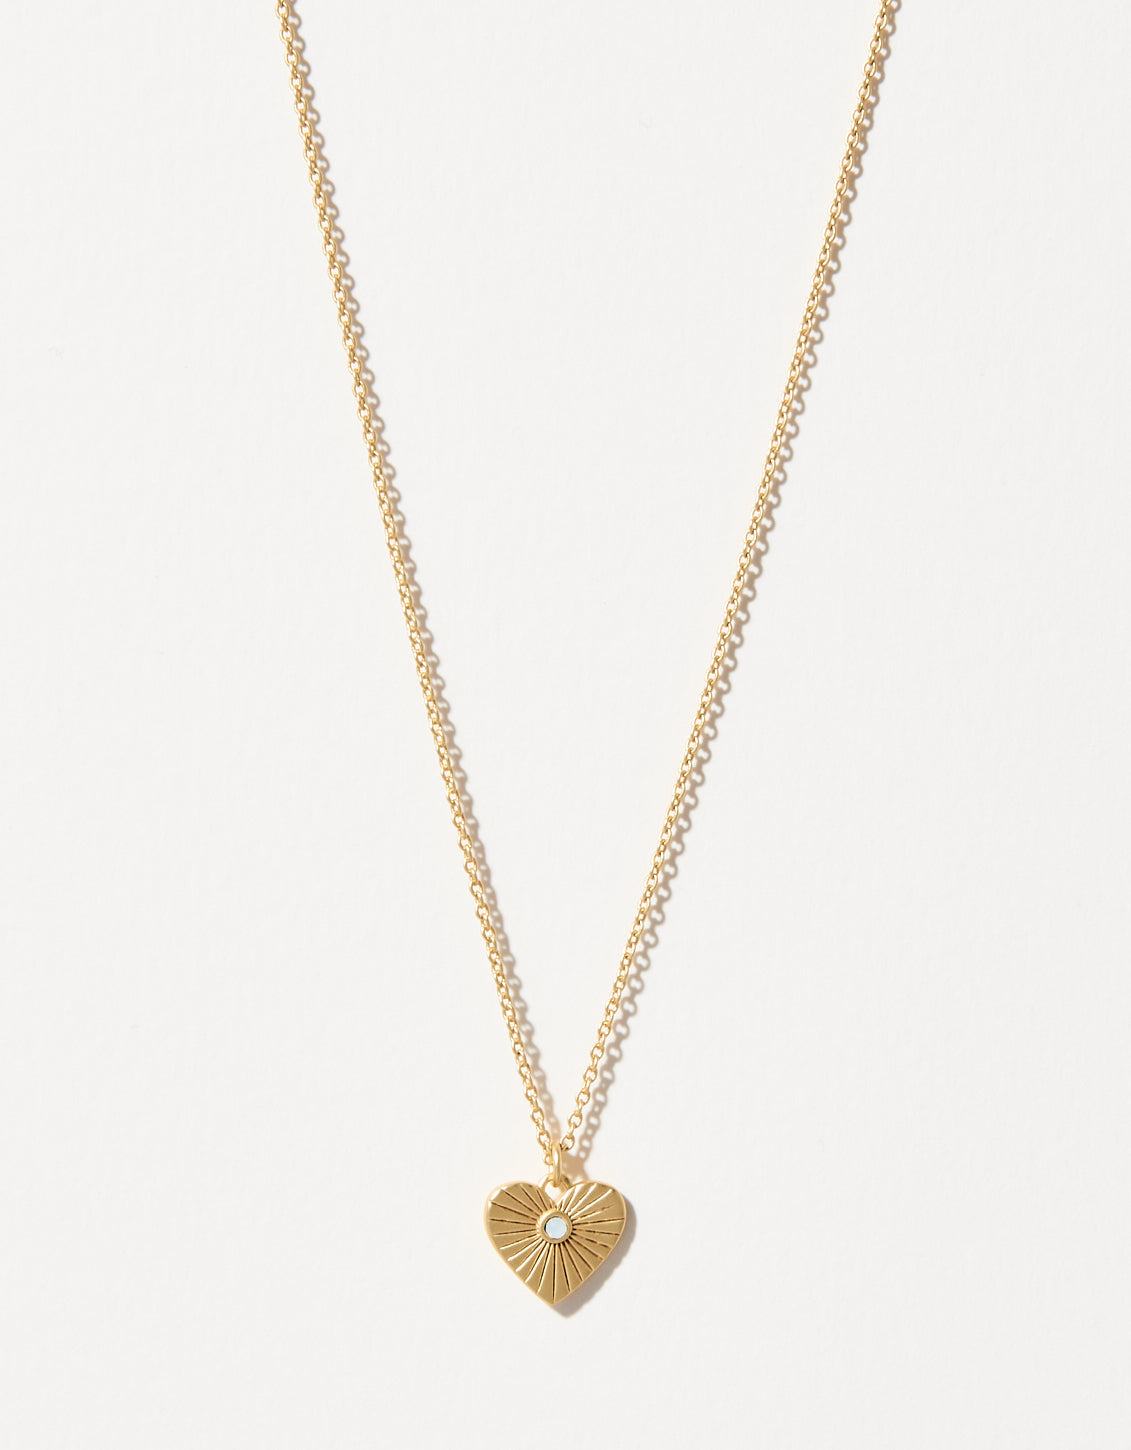 Spartina Sea La Vie Necklace Heart of Gold